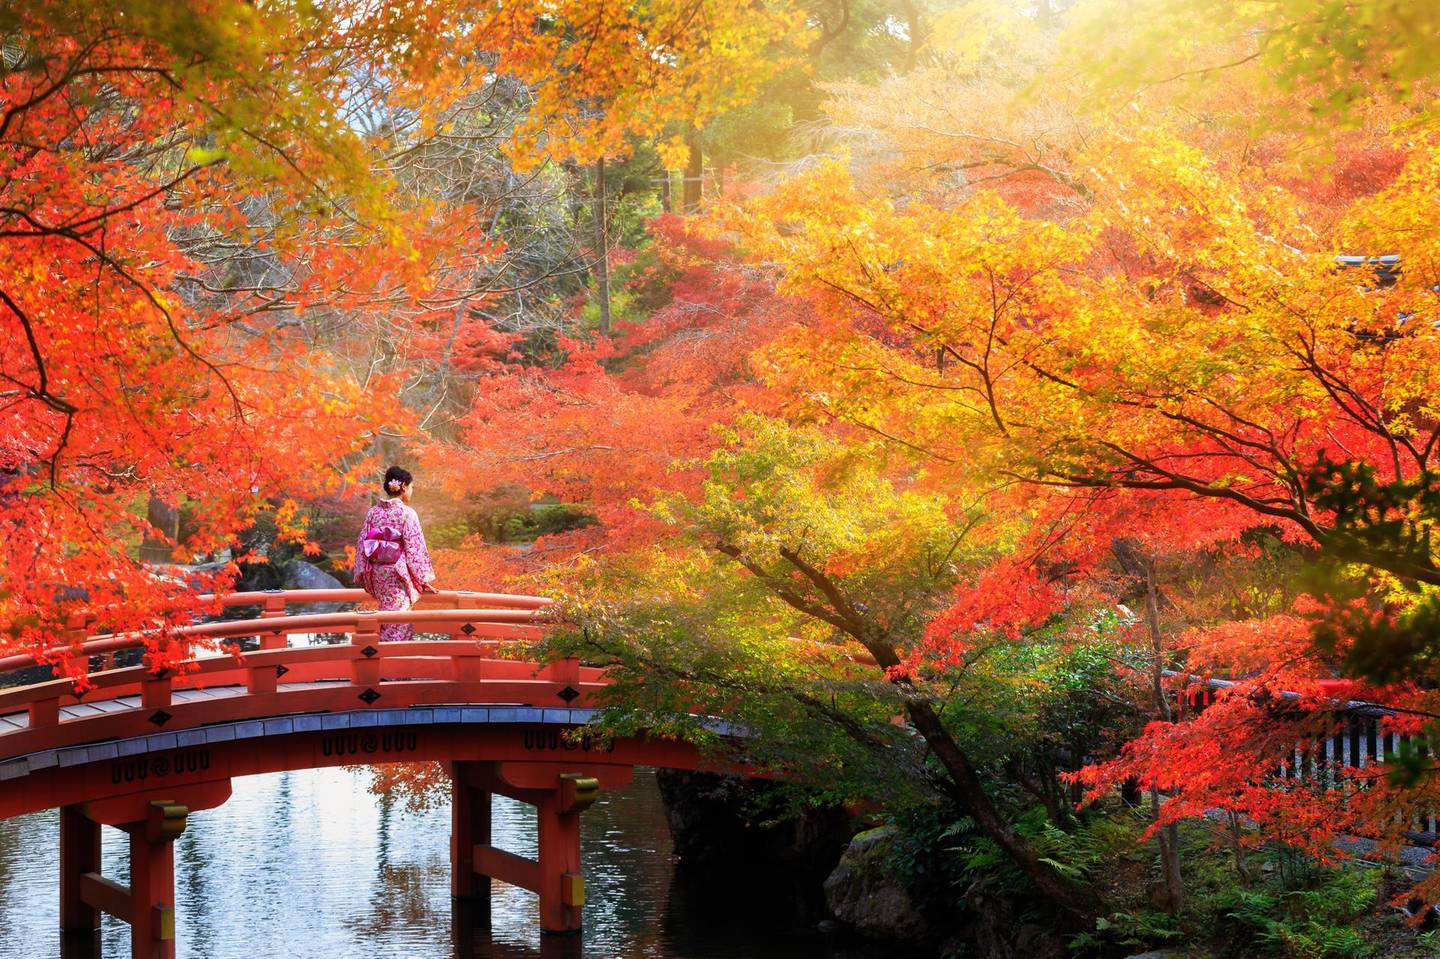 Wooden bridge in the autumn park, Japan. Getty Images